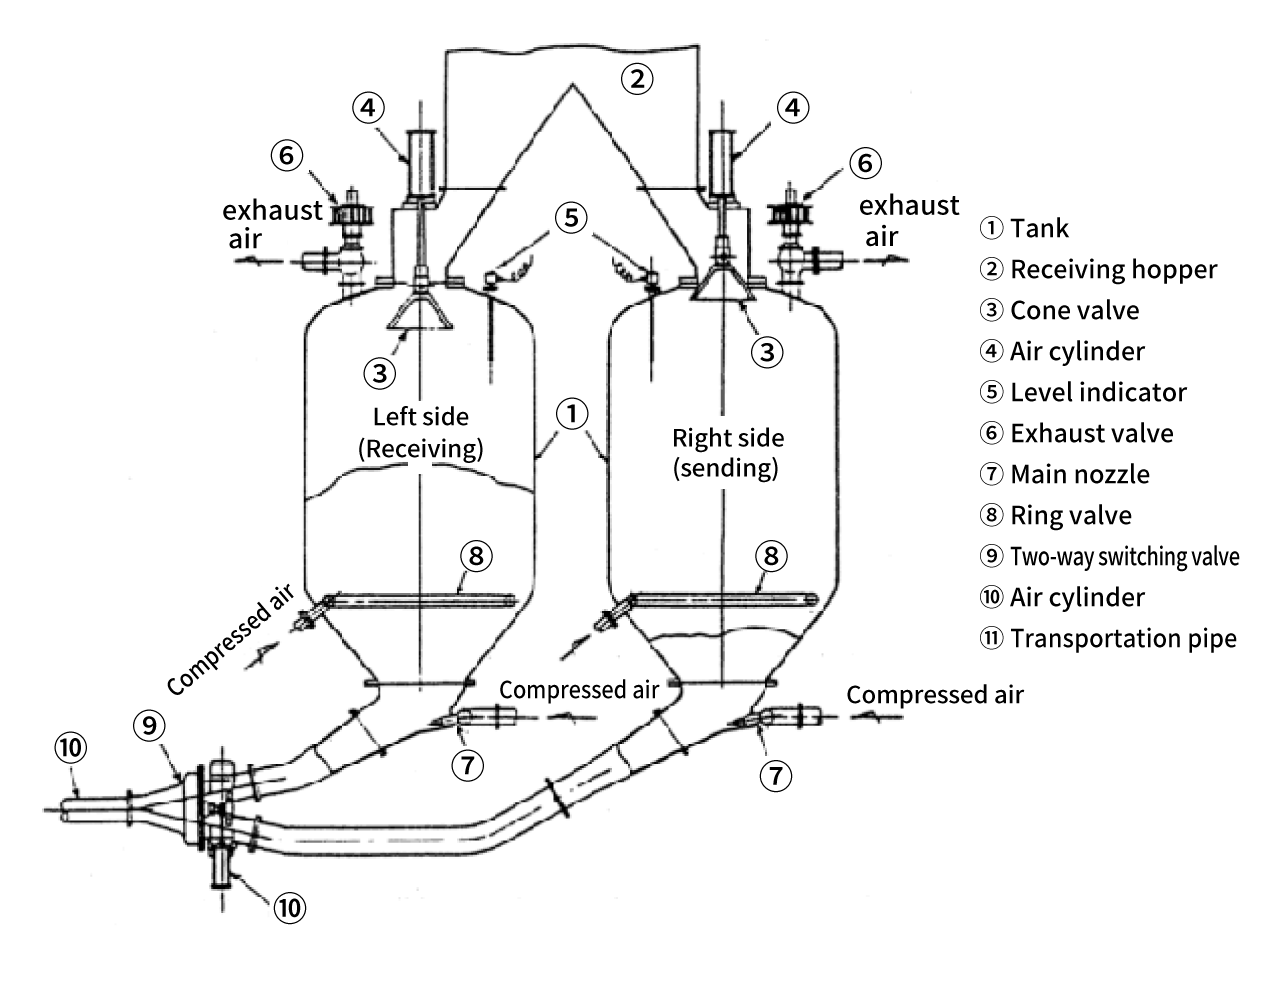 Structure of Cera pump